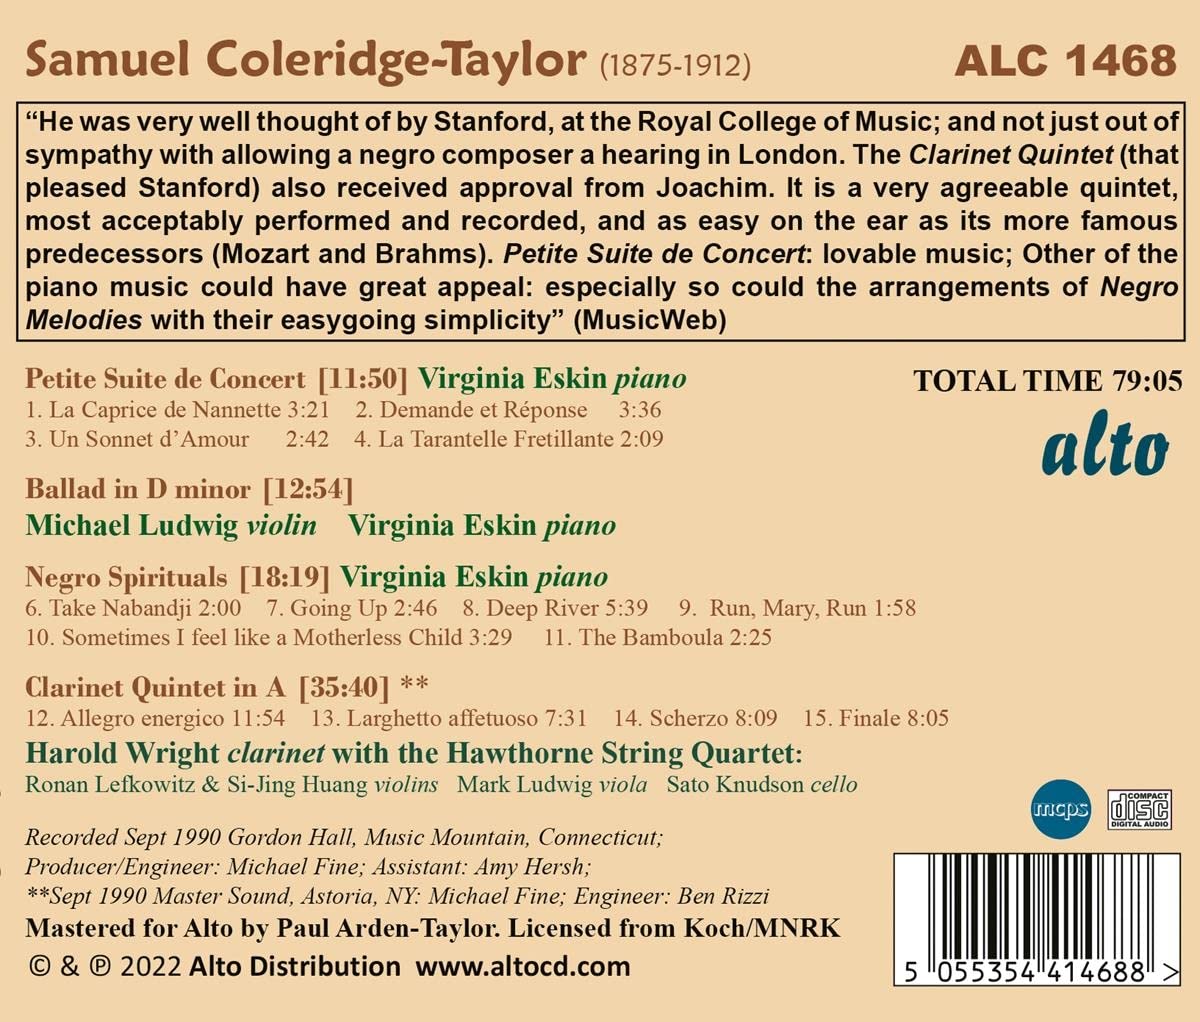 Harold Wright 사무엘 콜리지-테일러: 클라리넷 오중주 외 ( Coleridge-Taylor: Clarinet Quintet, Suite de Concert, Ballad, Spiritual for Piano)